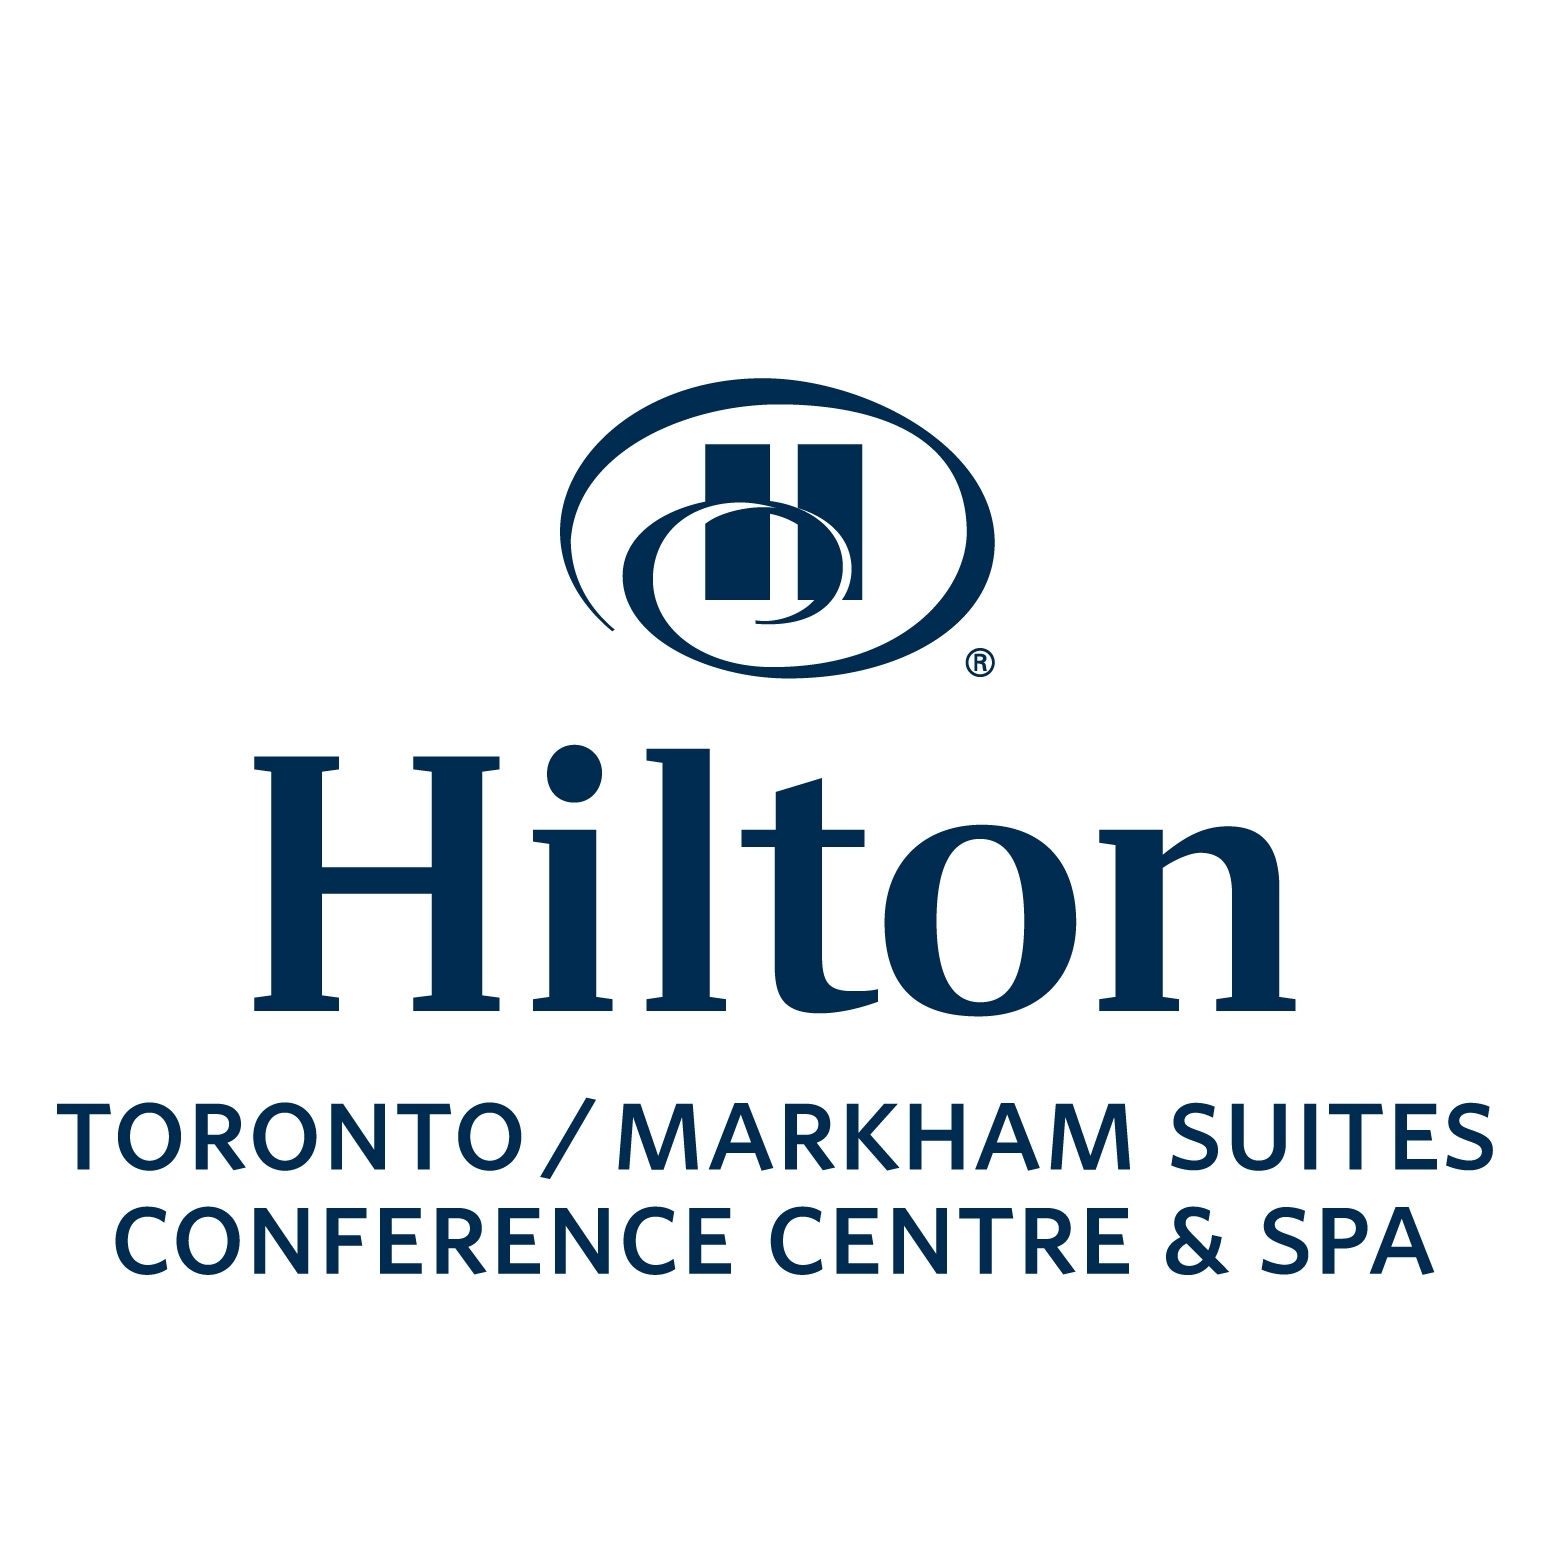 Hilton Toronto/Markham Suites Conference Center & Spa